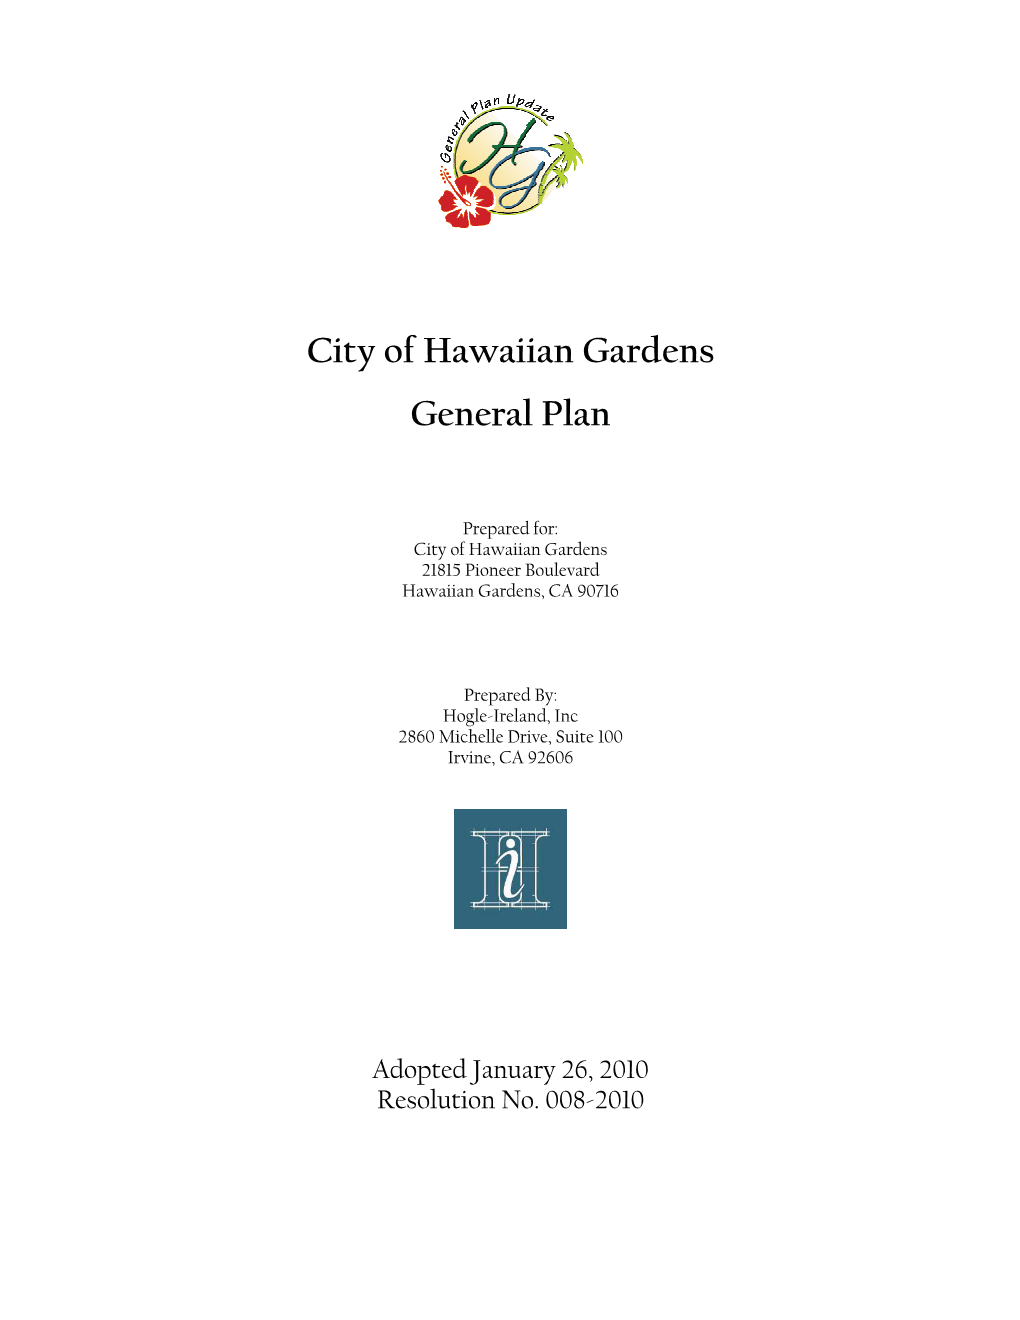 City of Hawaiian Gardens General Plan I